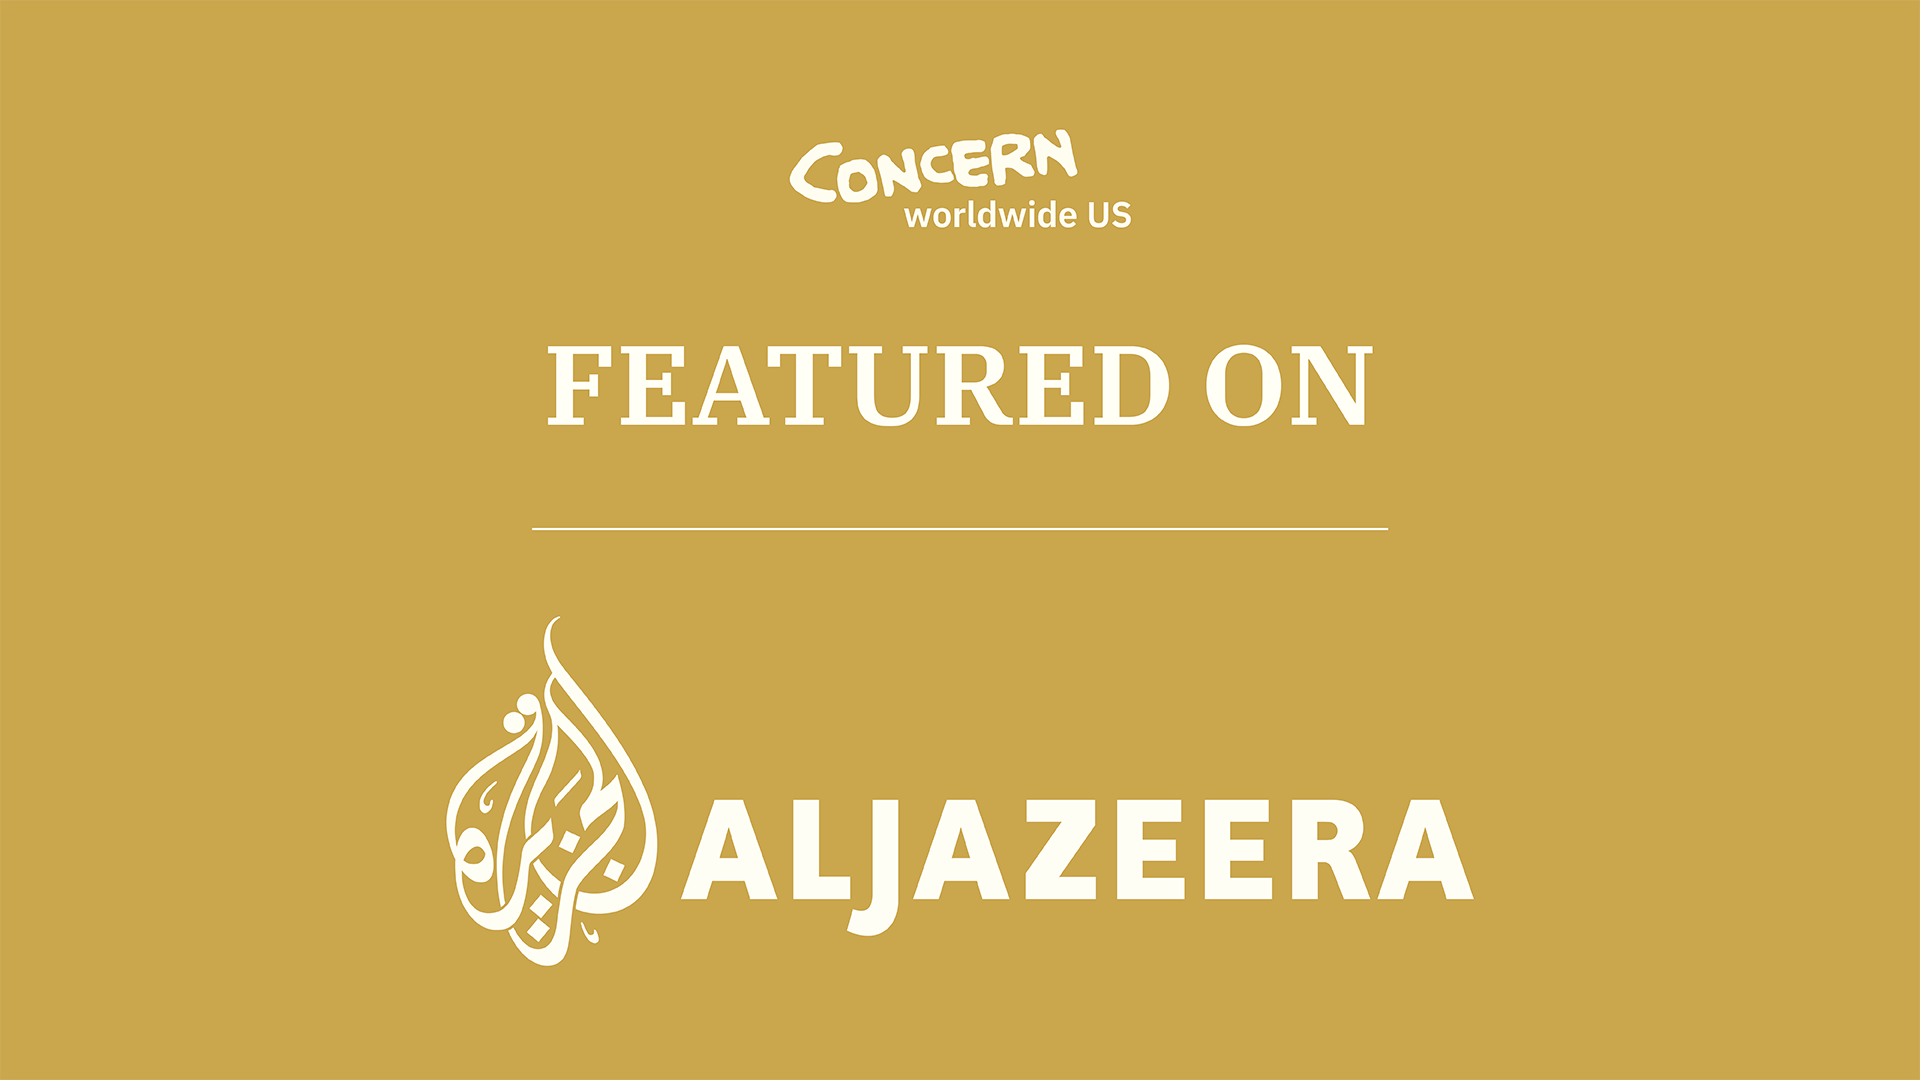 Concern Worldwide featured on Al Jazeera